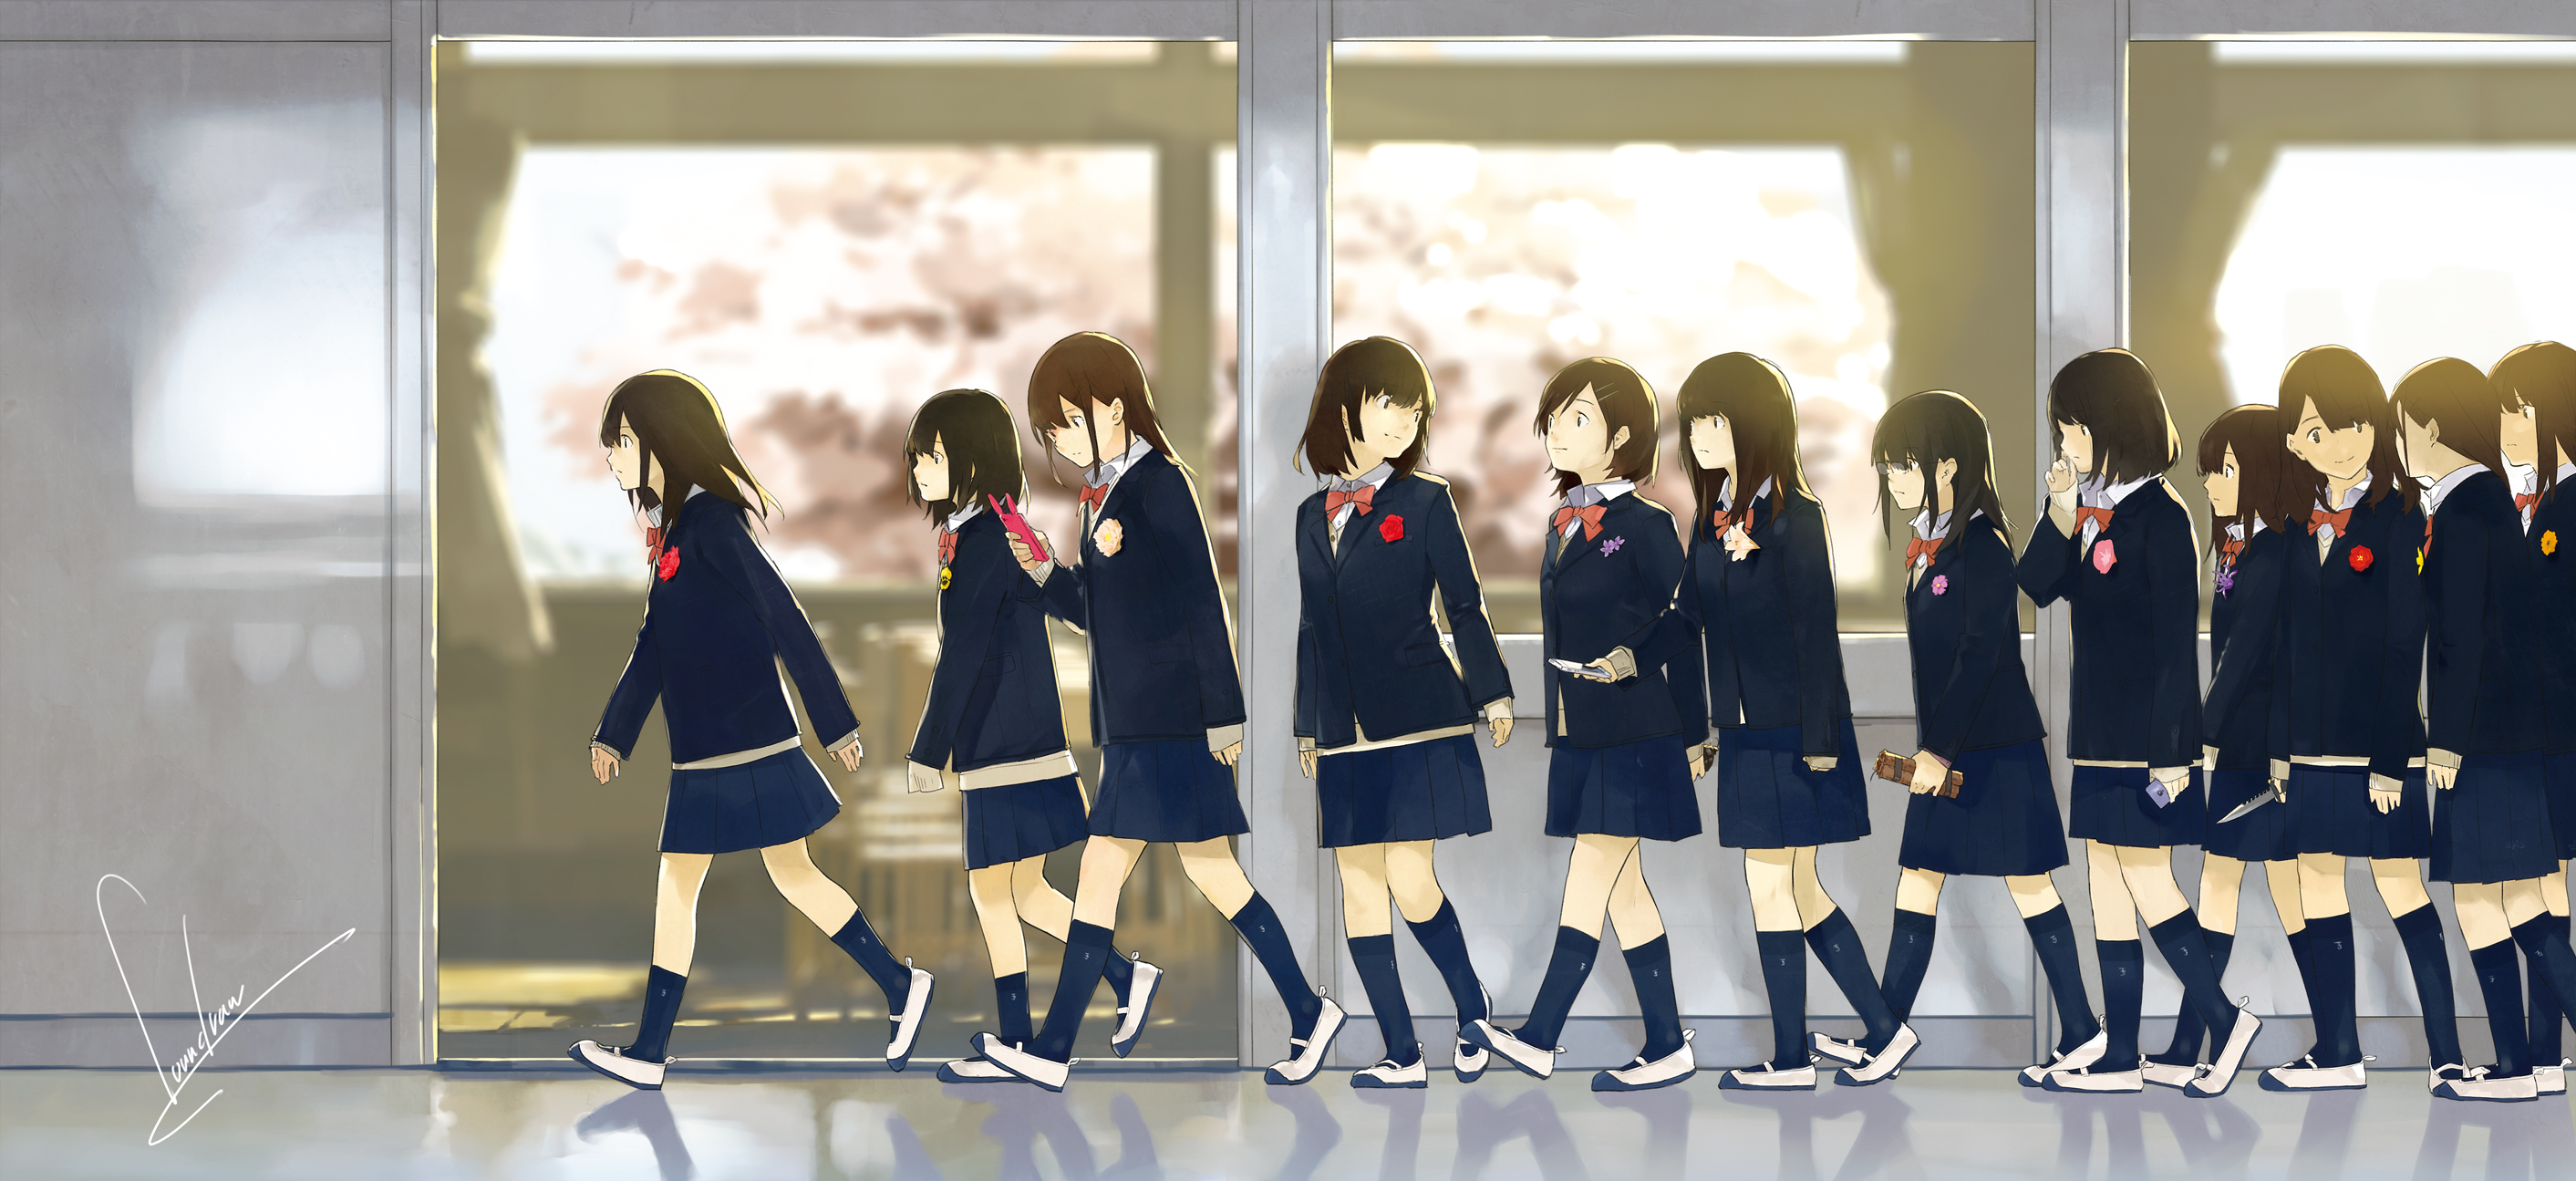 Anime 2825x1295 loundraw anime girls short hair JK schoolgirl school uniform